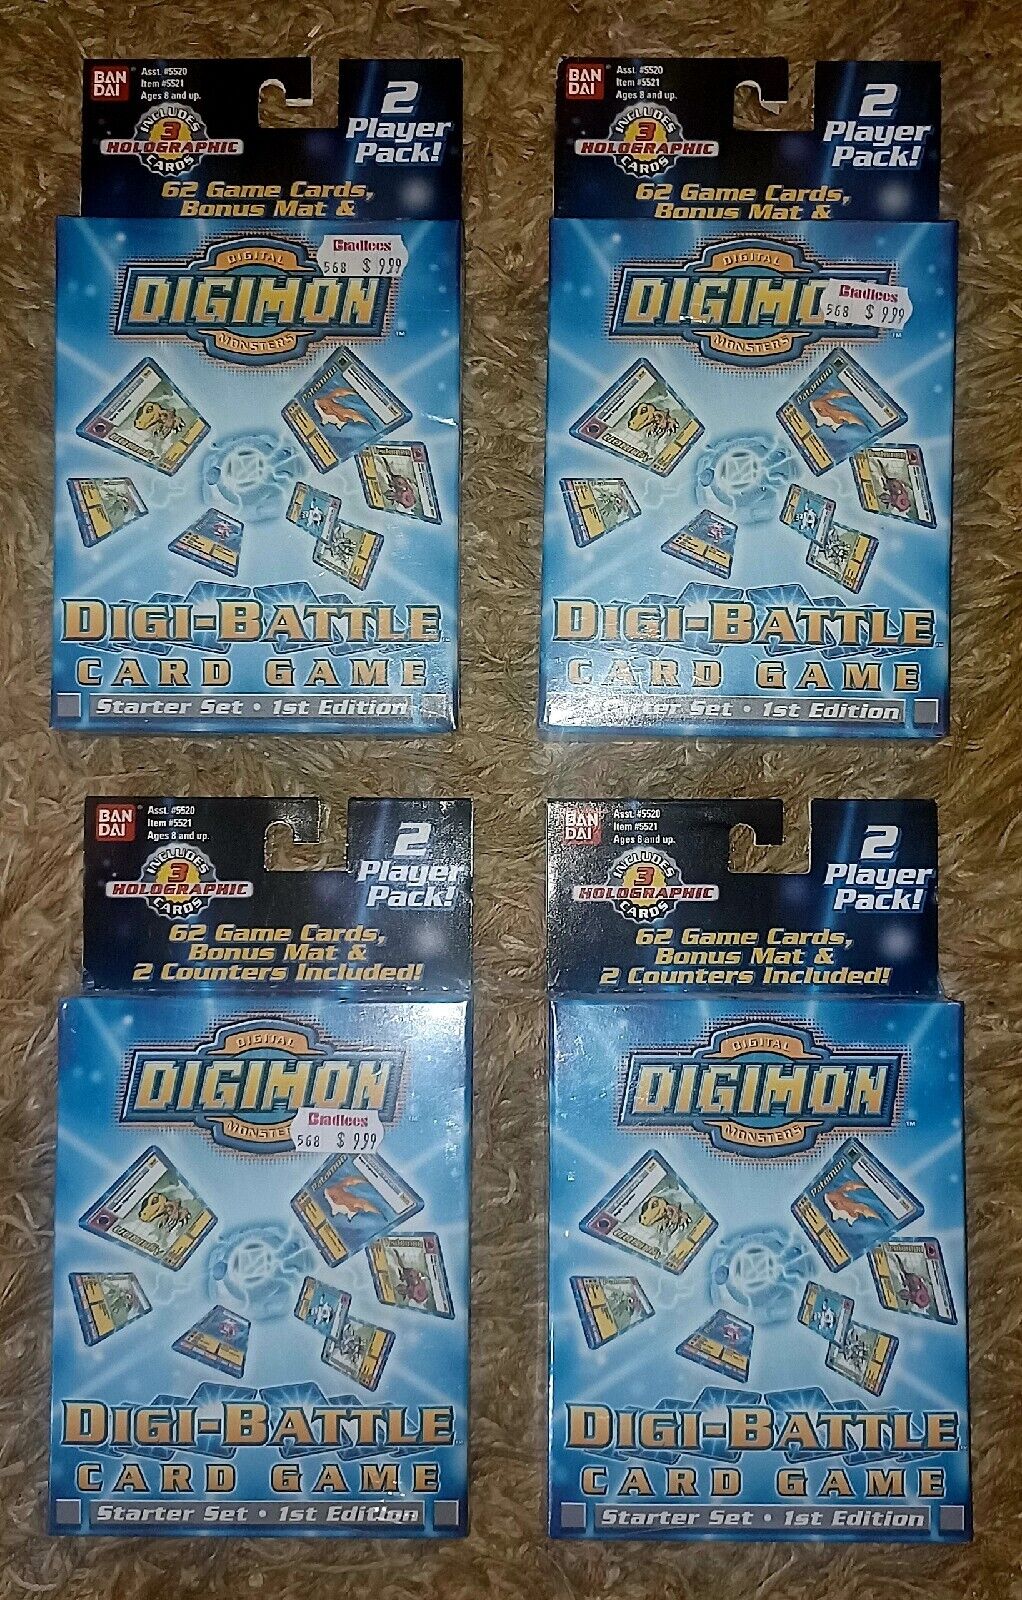 (1) DIGIMON DIGI-BATTLE CARD GAMES 1ST EDITION 2 PLAYER PACKS NEW SEALED (2000)